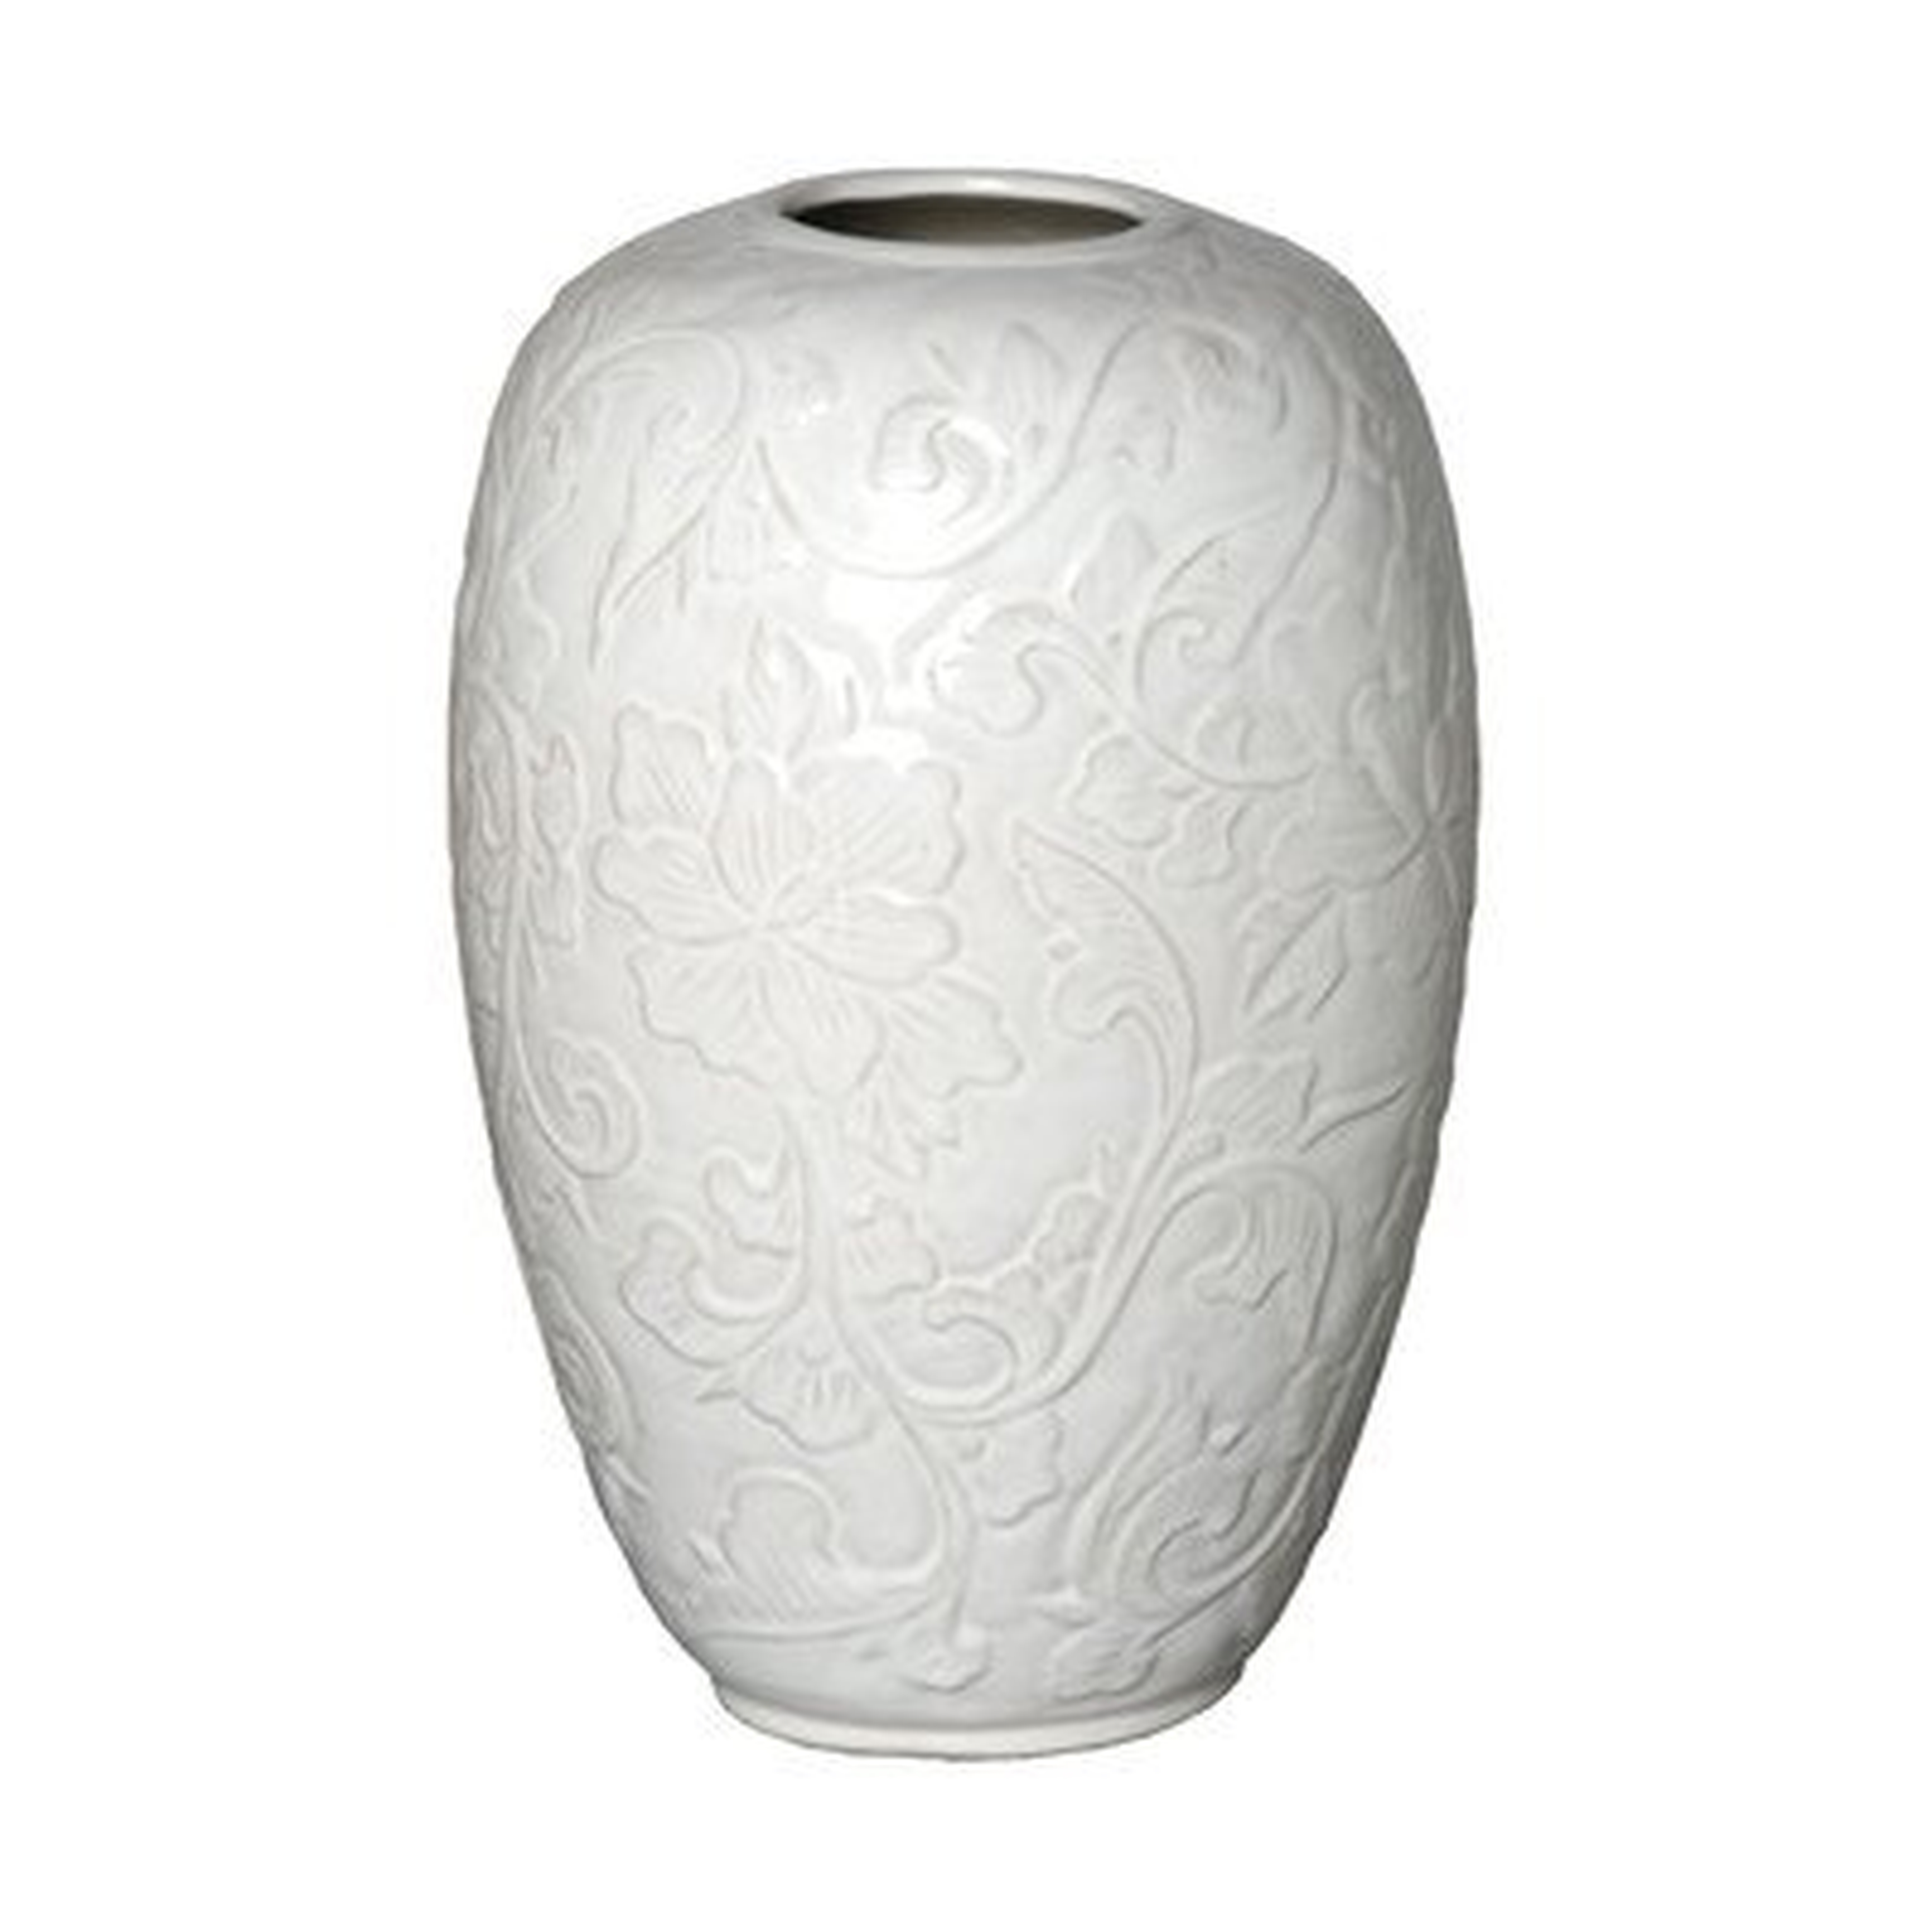 Botanical Relief Vase - Wayfair